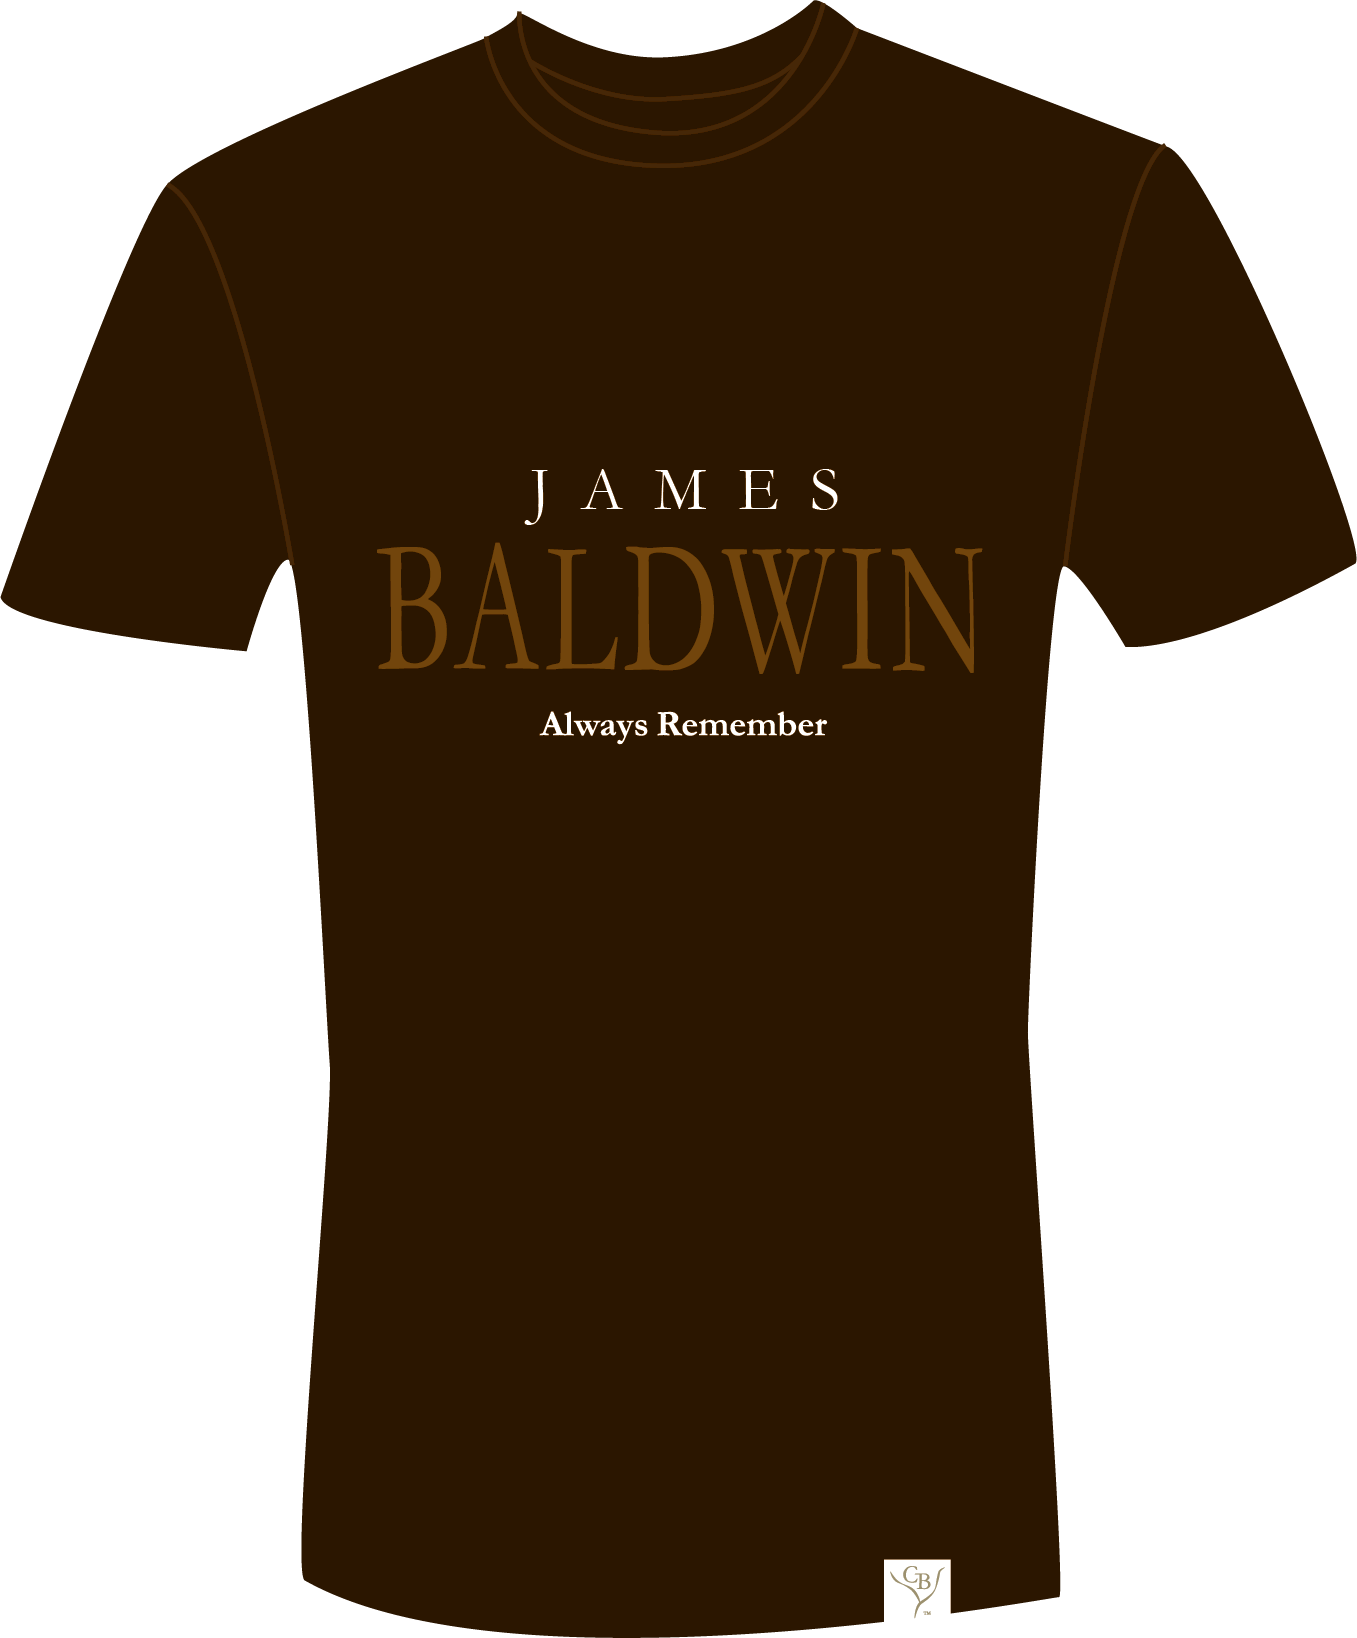 The Baldwin